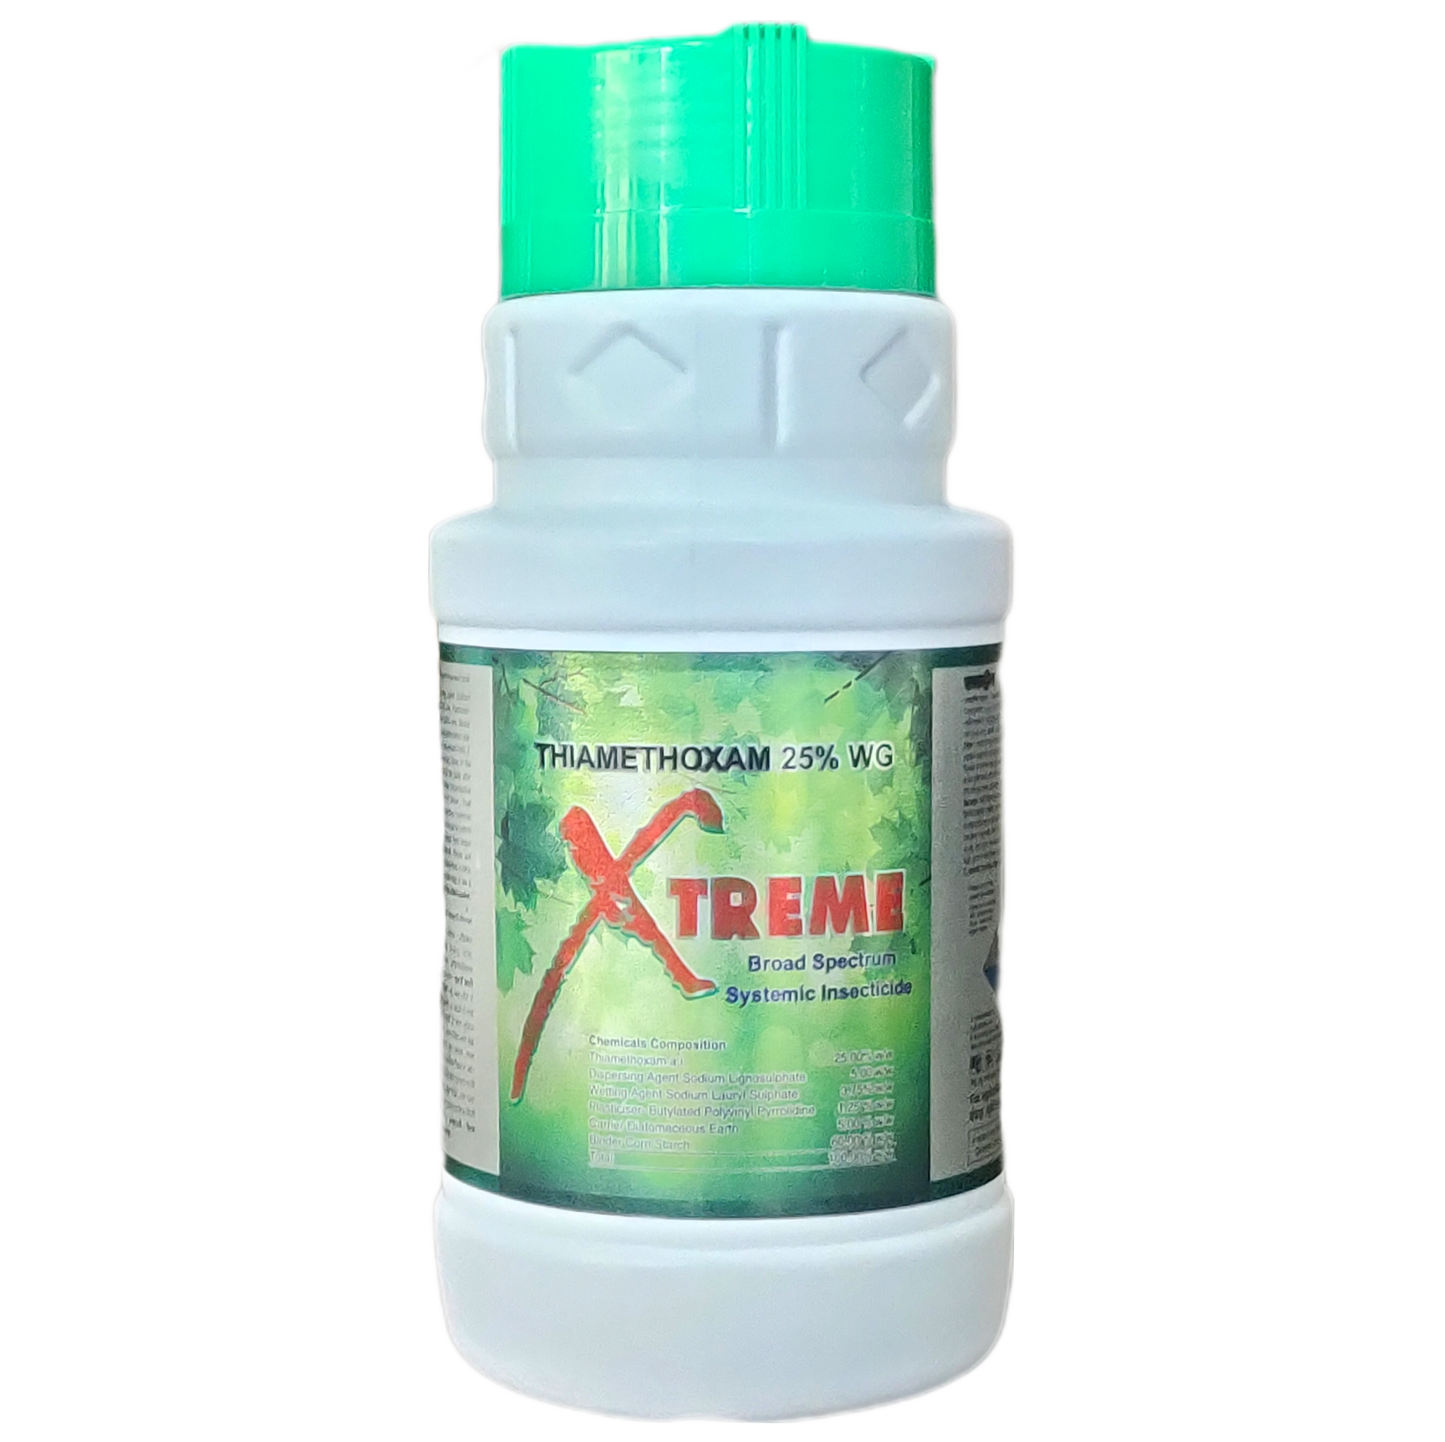 Xtreme - Thiamethoxam 25% WG insecticide